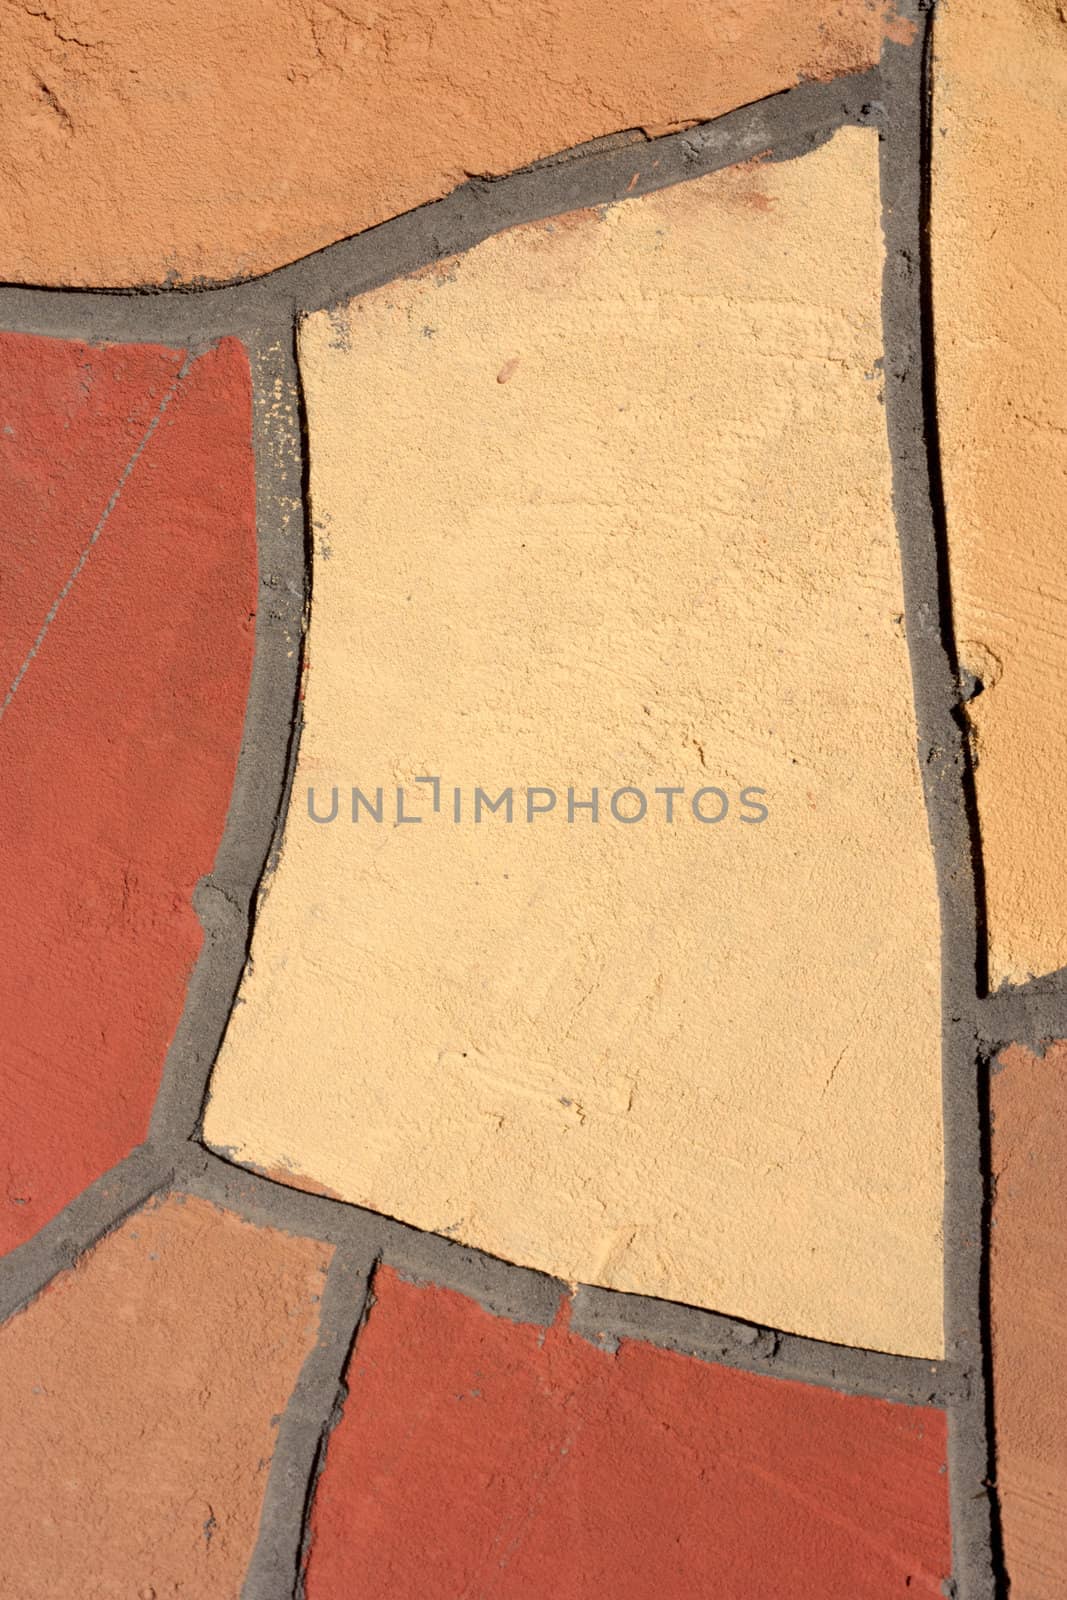 Irregular mosaic of wall outdoor